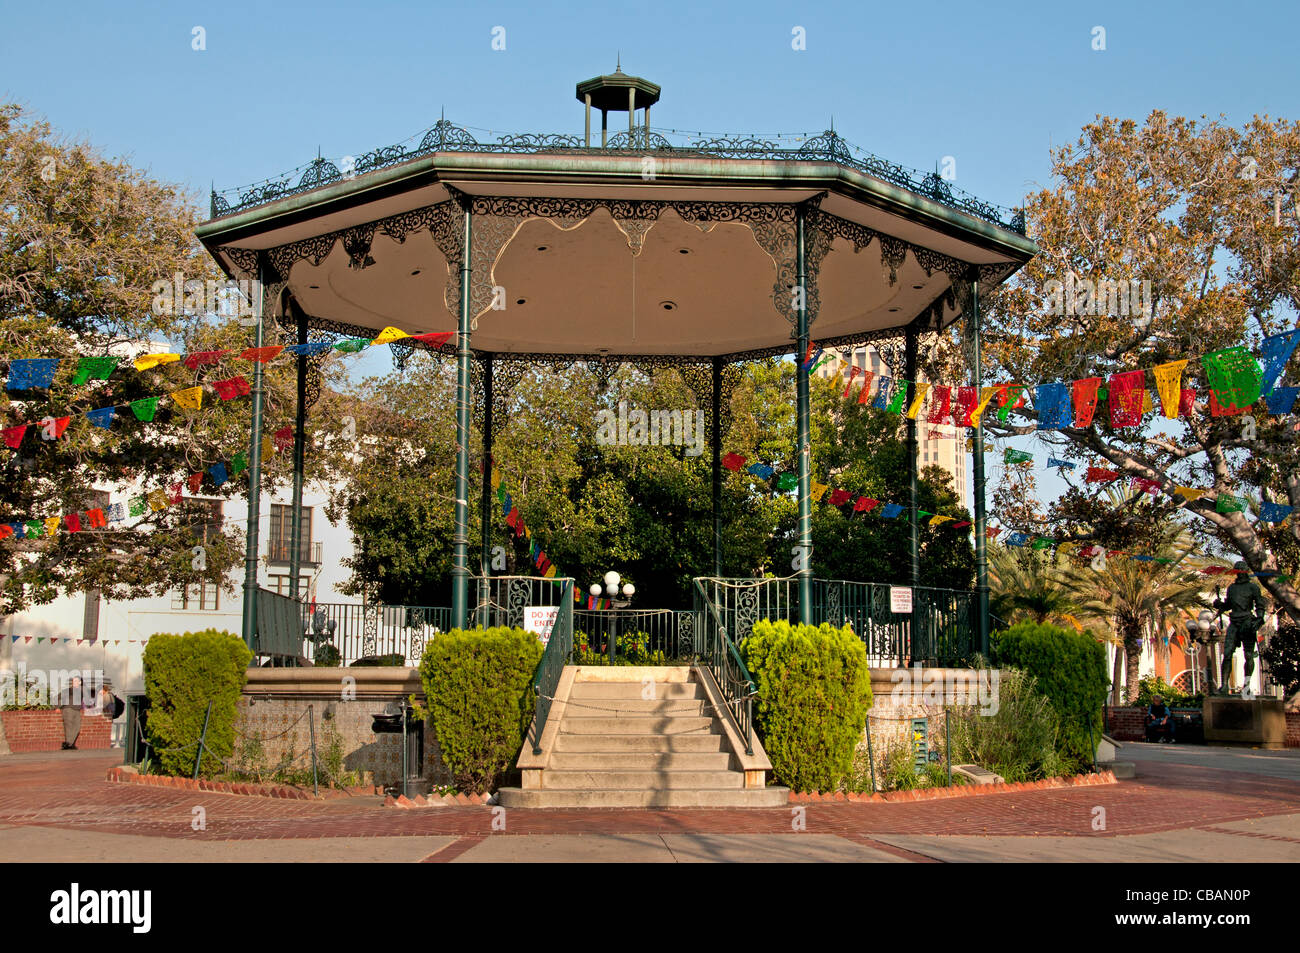 El Pueblo Innenstadt Spanisch Spanien Los Angeles Kalifornien Vereinigte Staaten Stockfoto